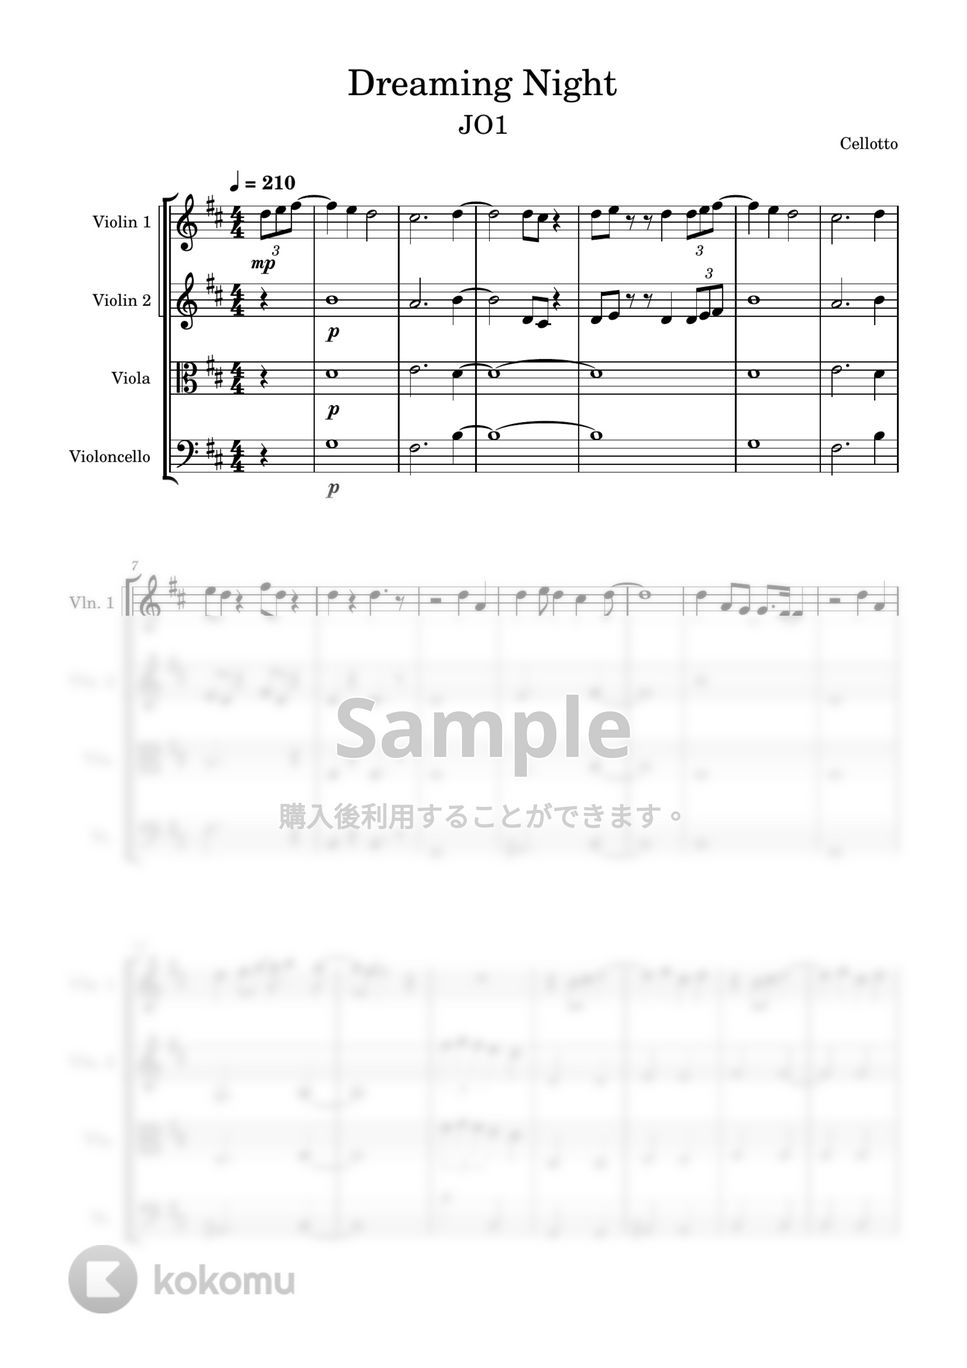 JO1 - Dreaming Night (弦楽四重奏) by Cellotto